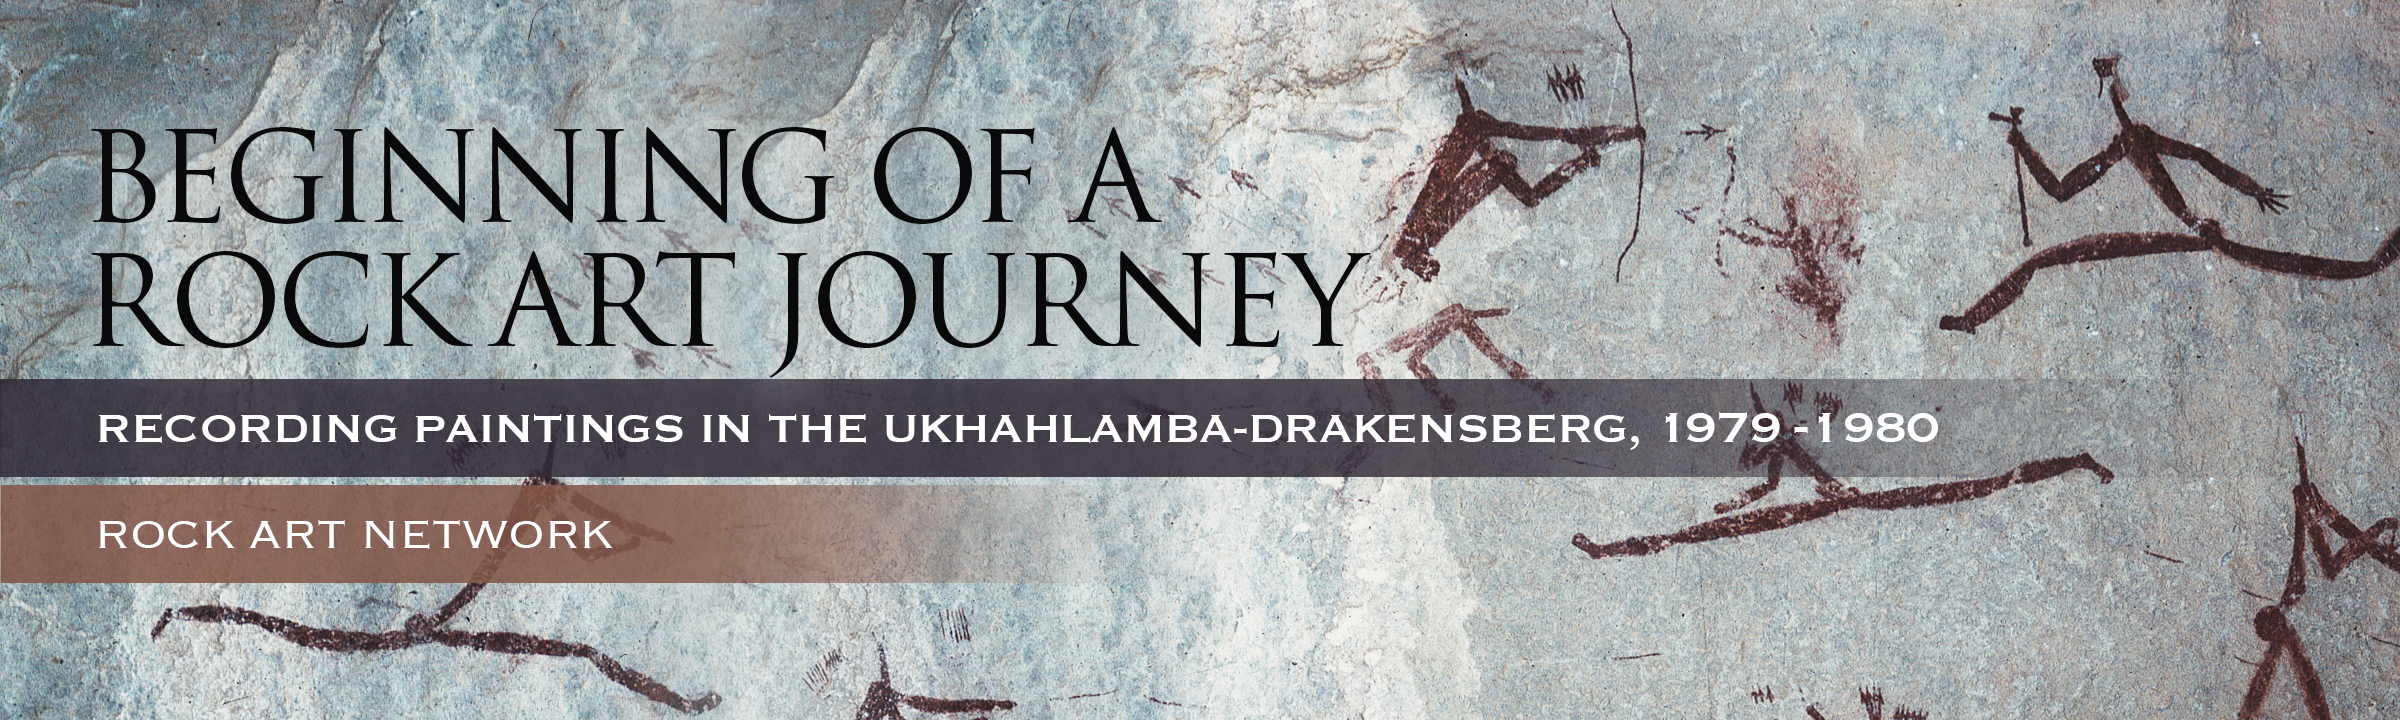 Beginning of a Rock Art Journey Recording paintings in the uKhahlamba-Drakensberg 1979 ‒ 1980